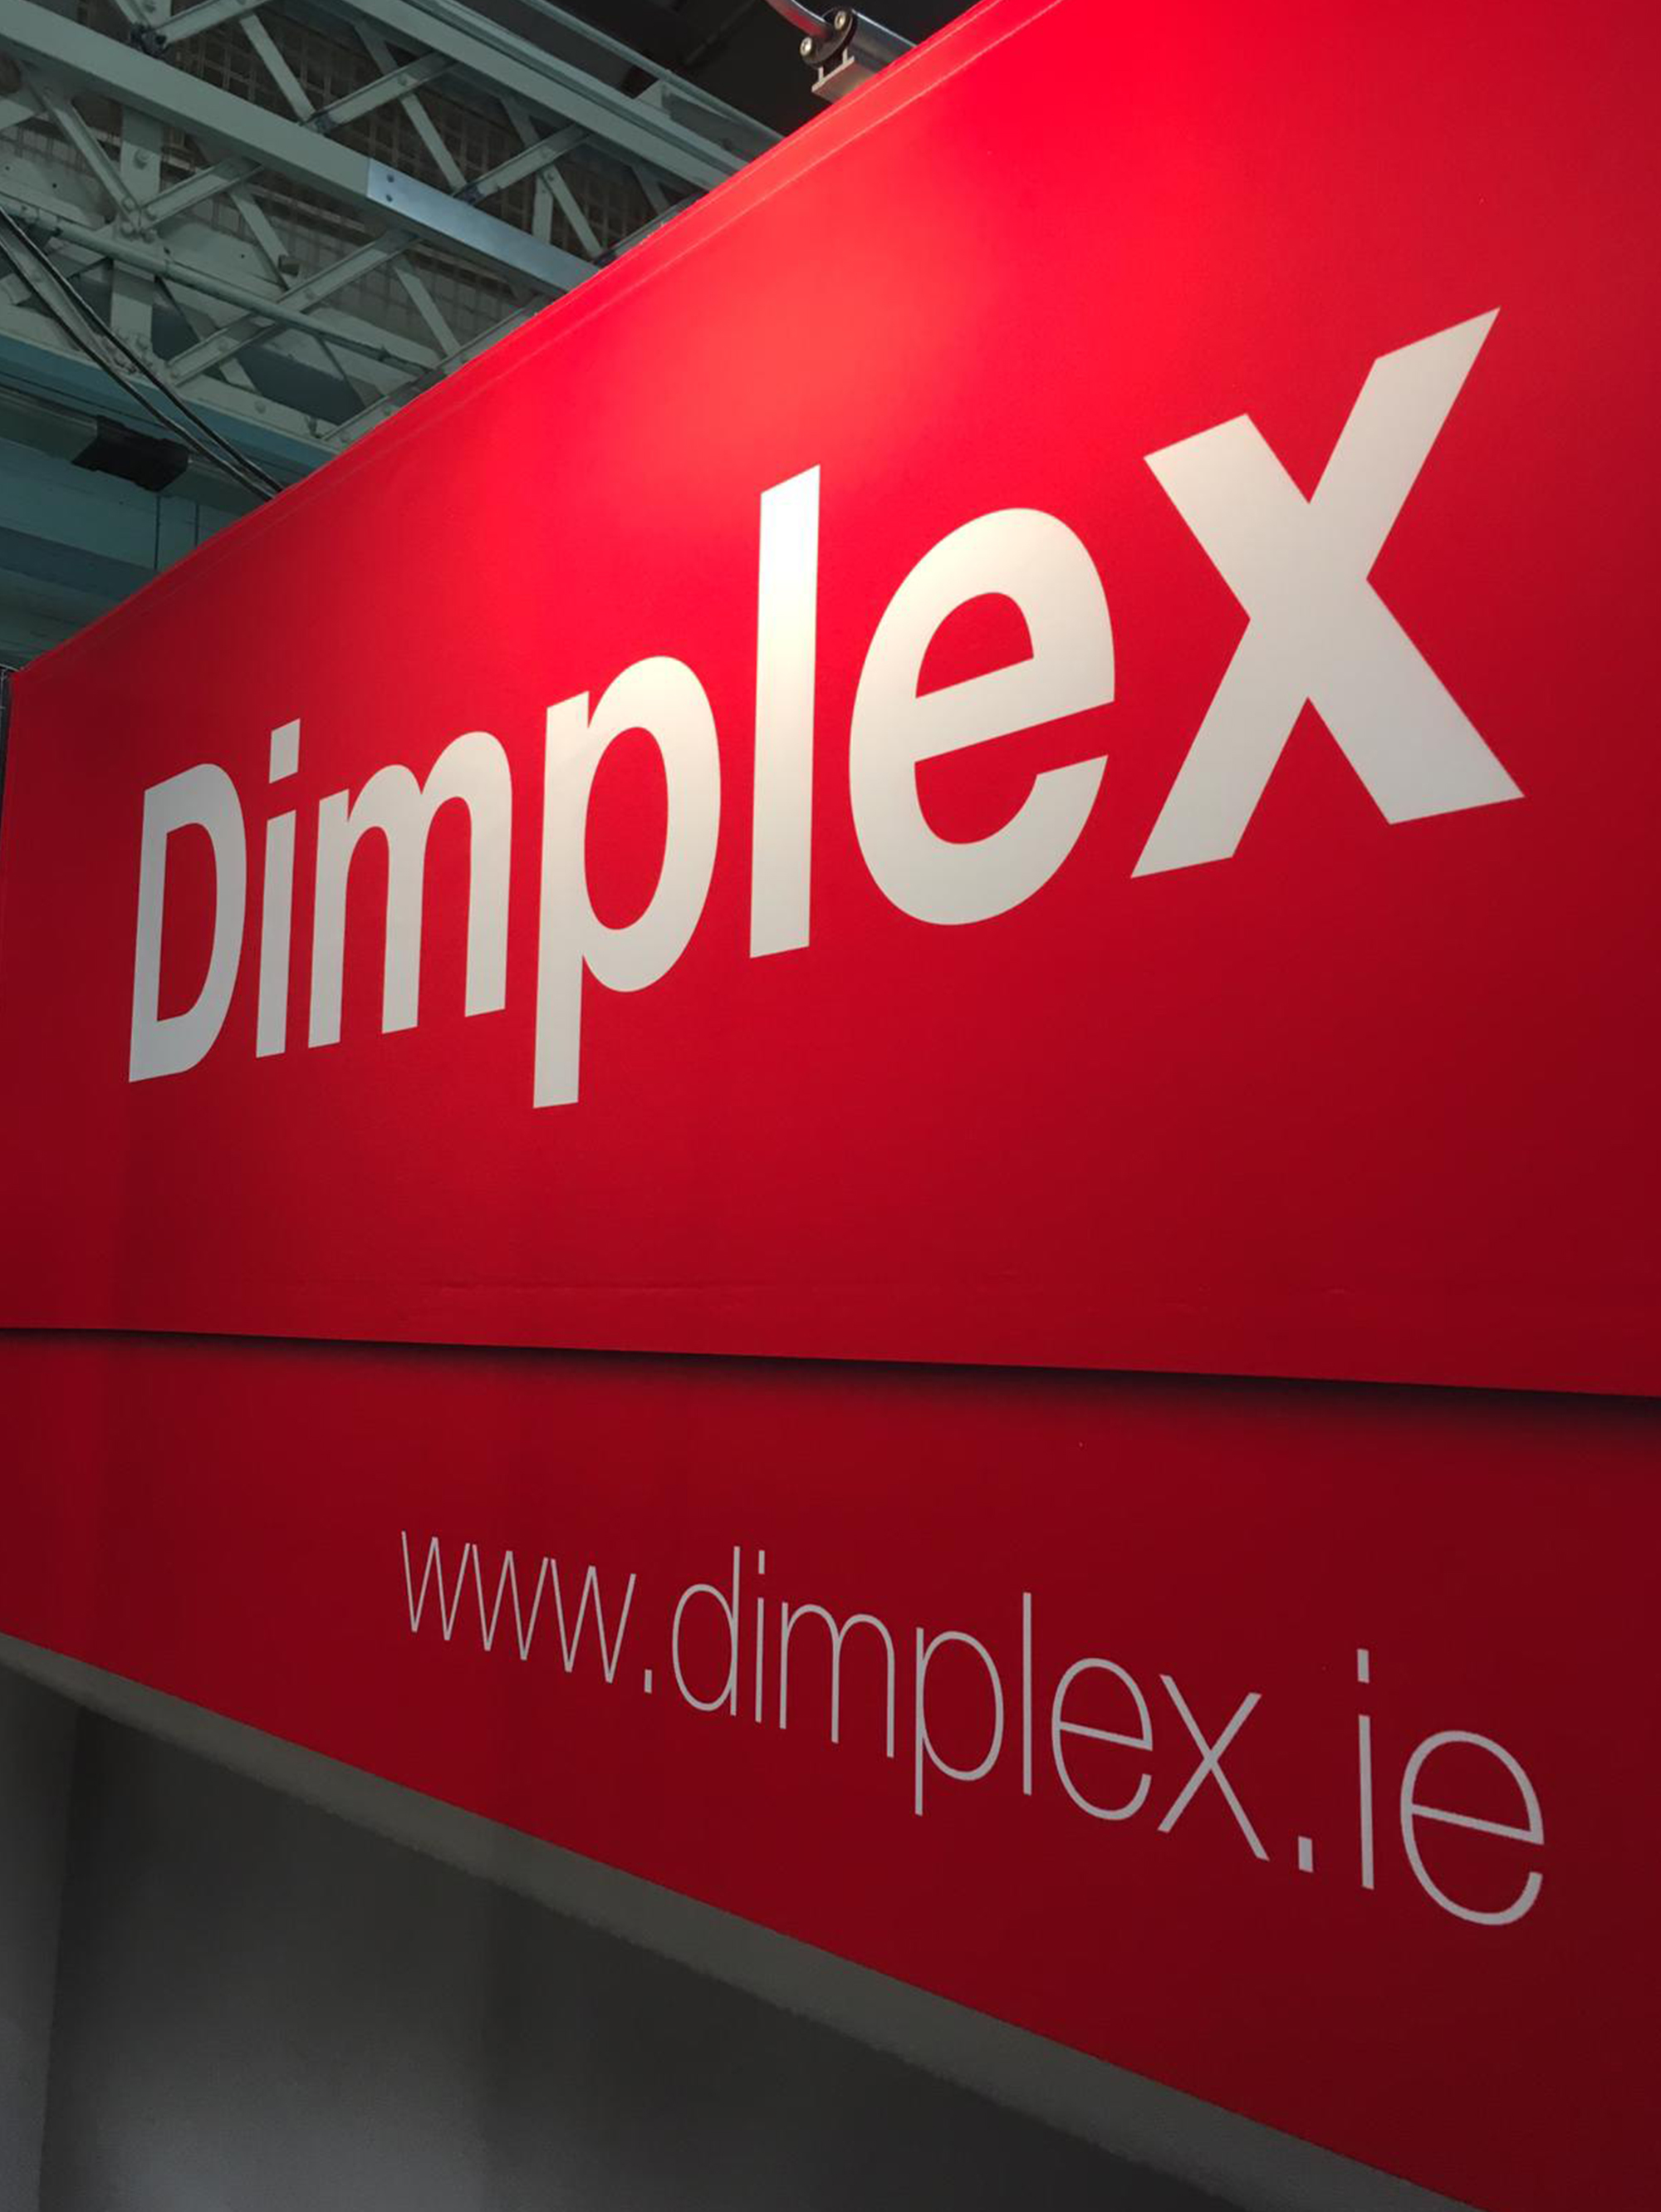 Glen Dimplex Ireland headline image